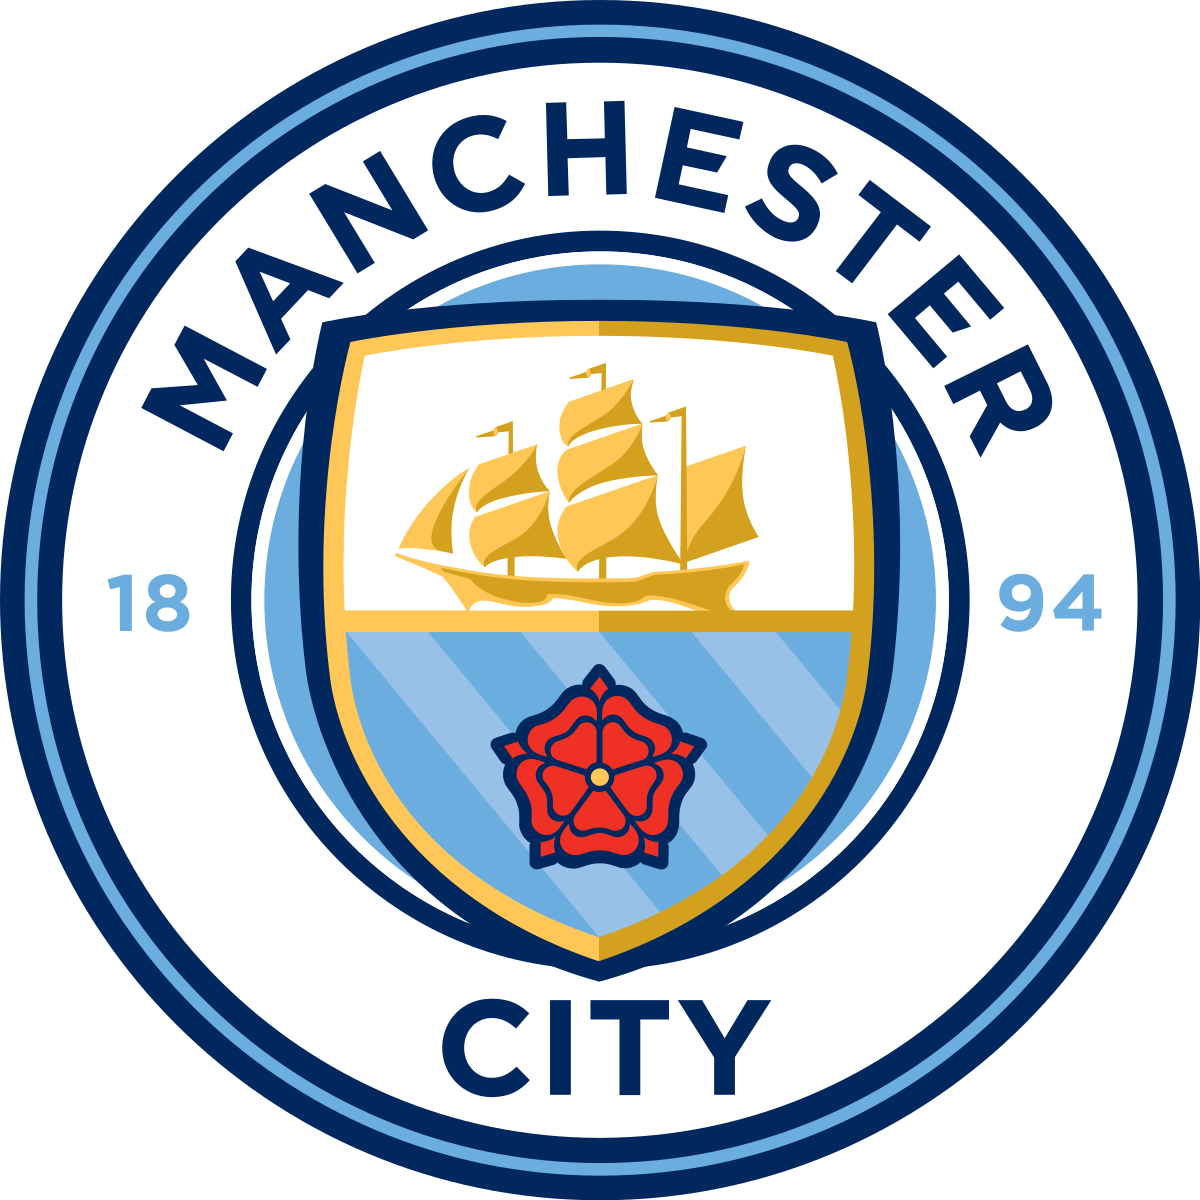 M.C.f.c Logo - Manchester City F.C.